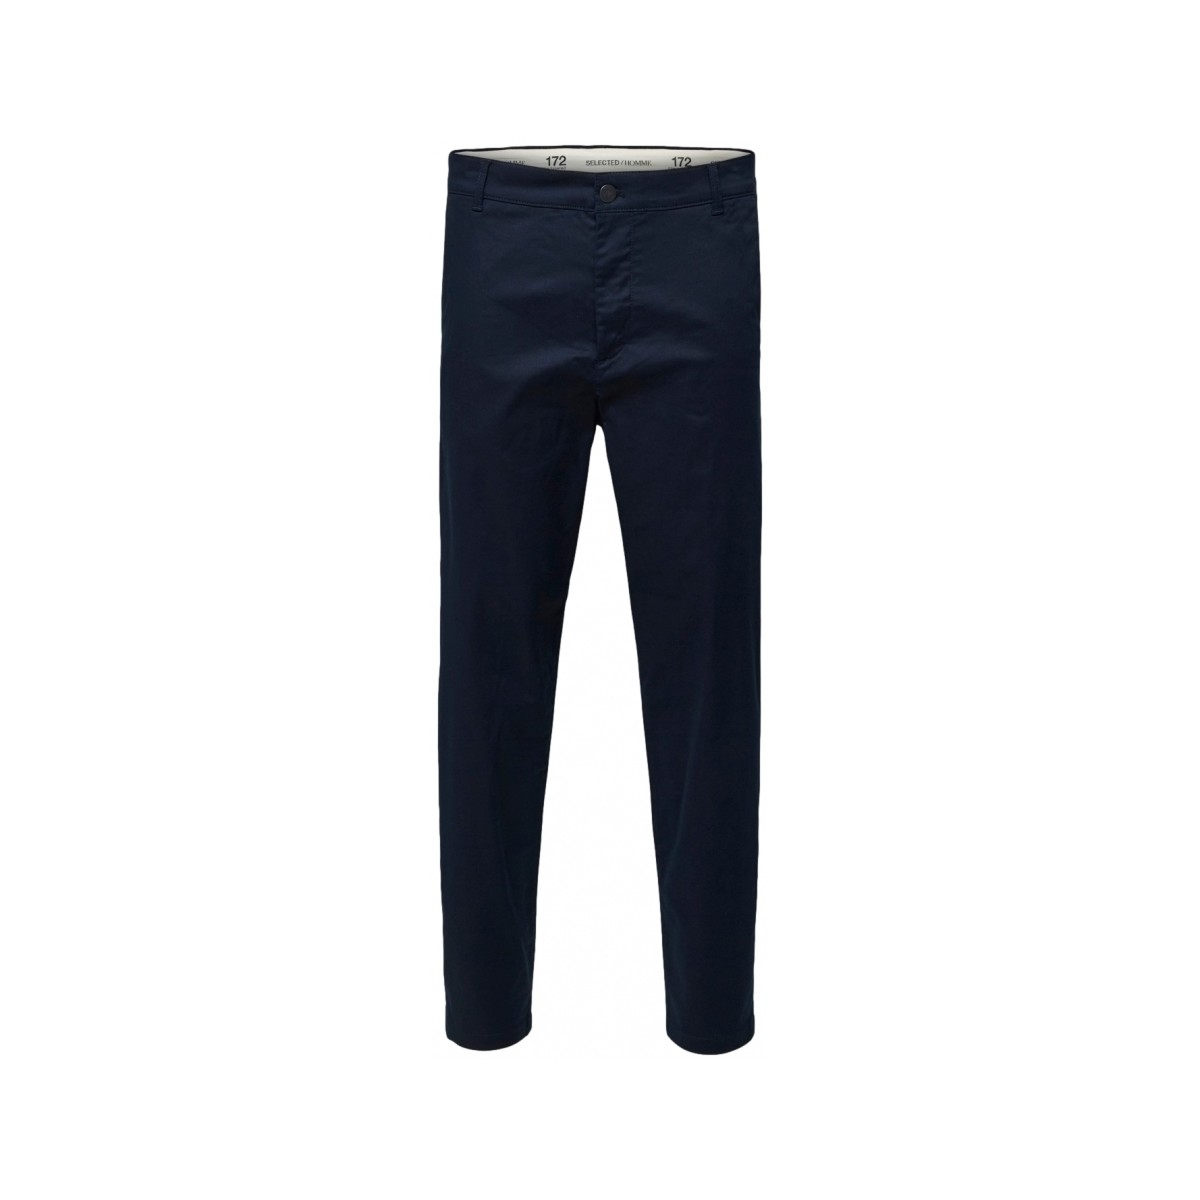 tekstylia Męskie Spodnie Selected Slim Tape Repton 172 Flex Pants - Dark Sapphire Niebieski